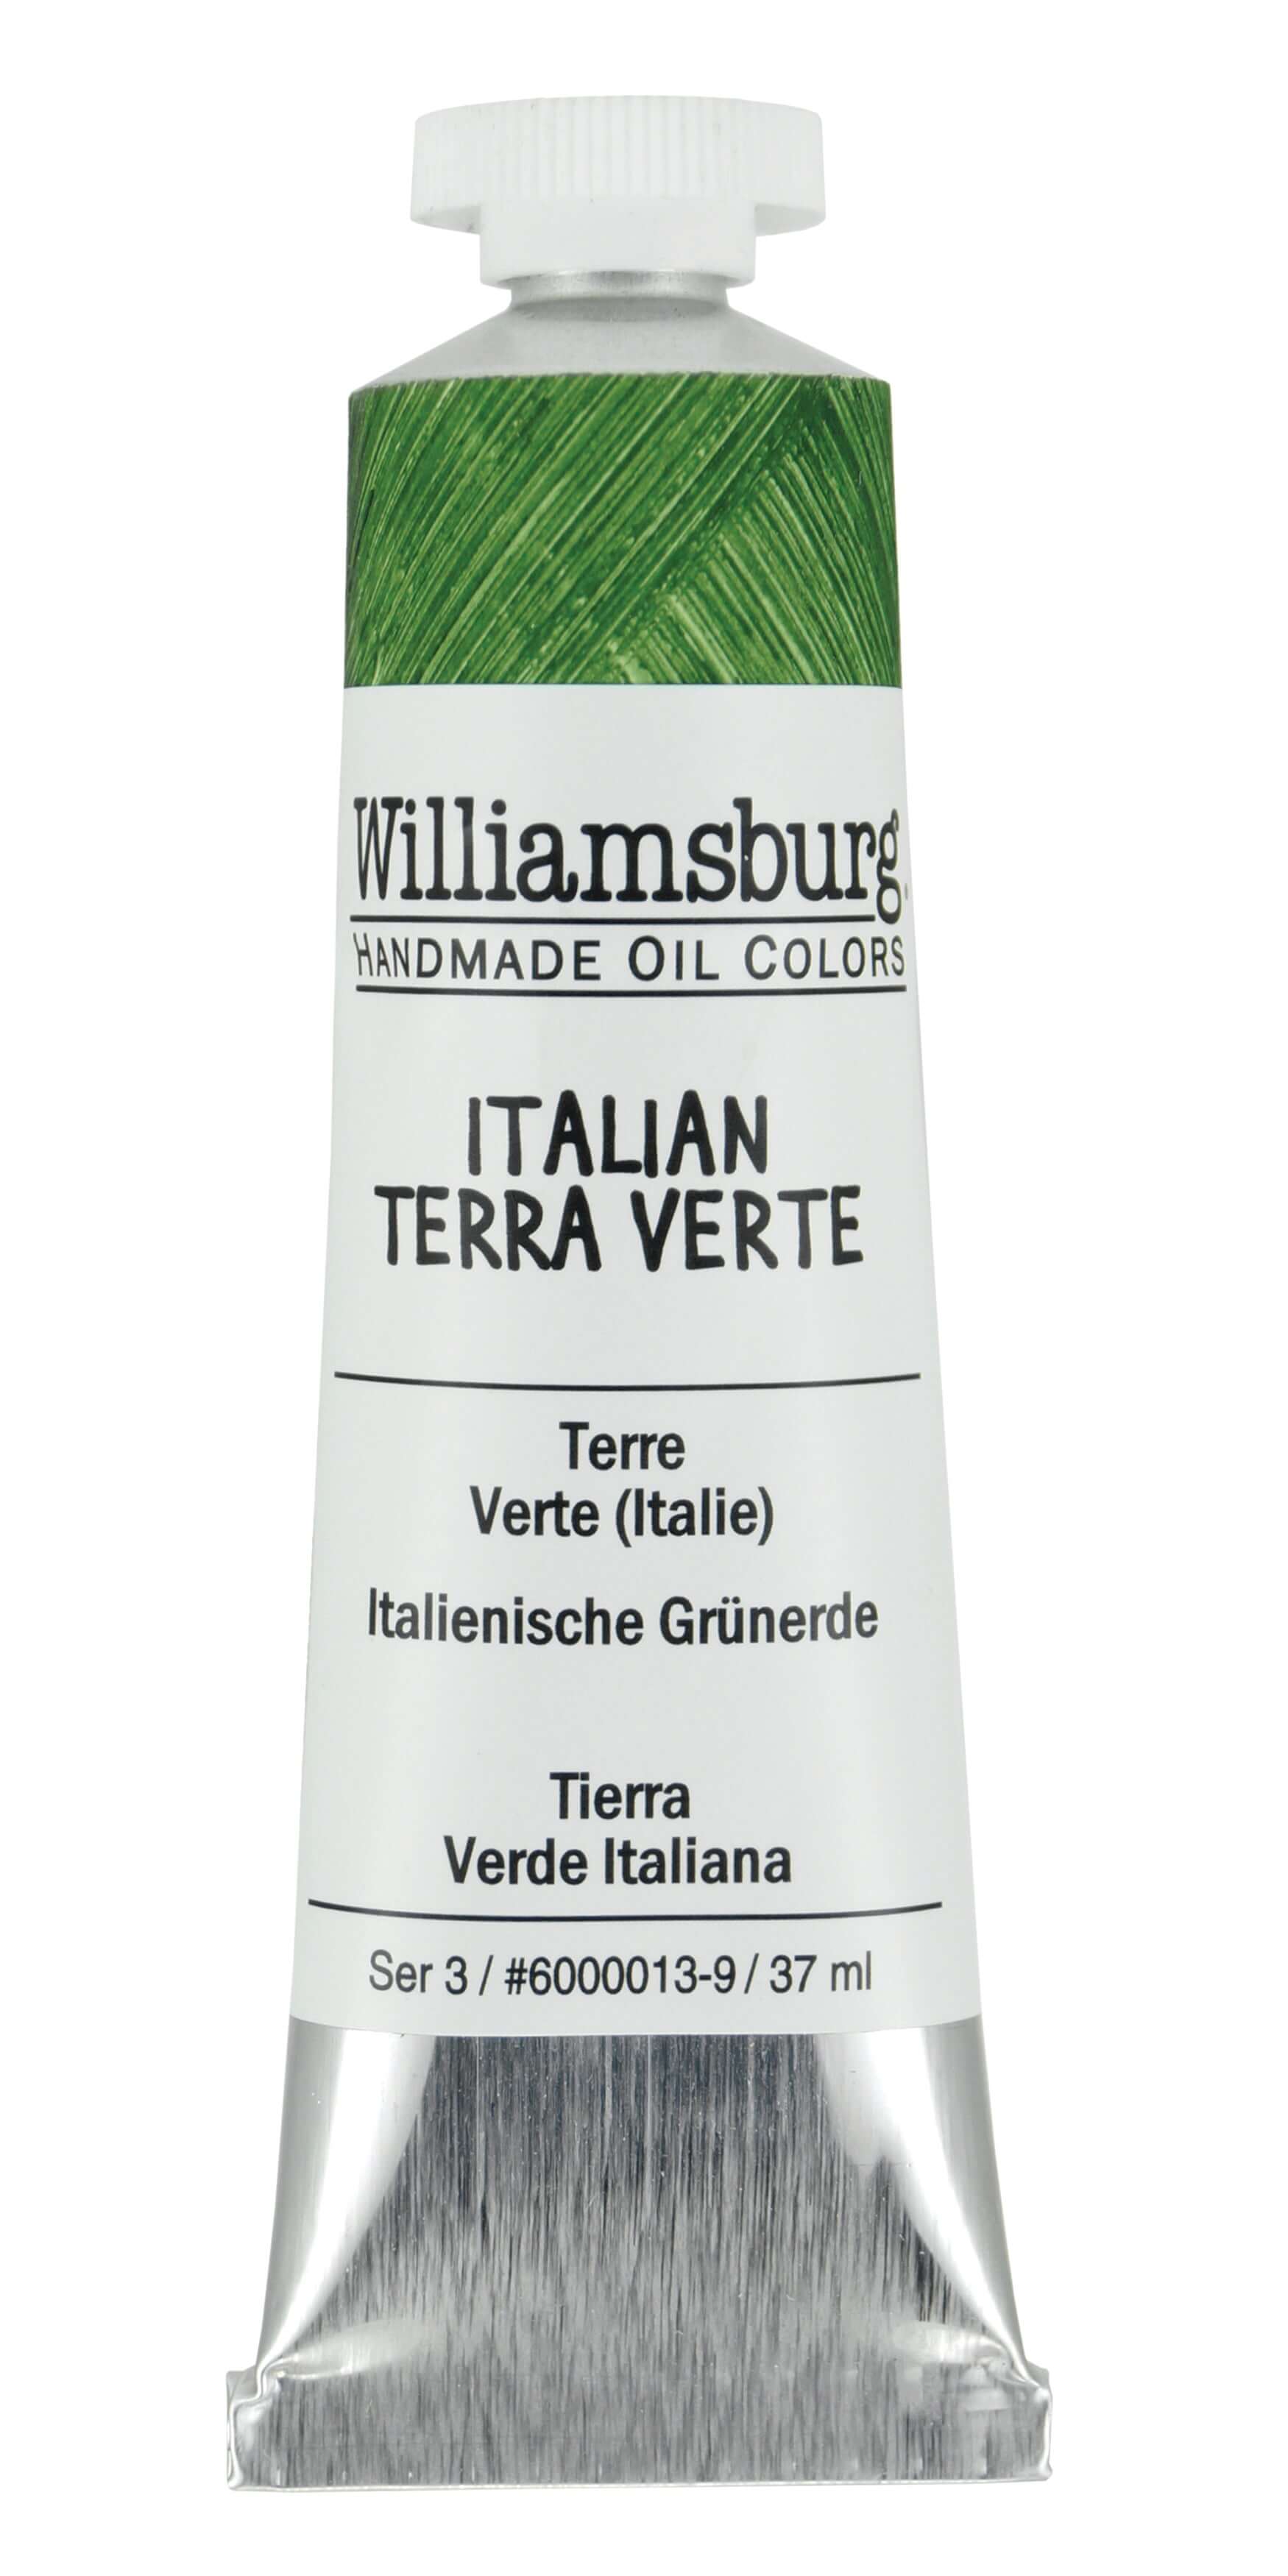 Williamsburg Oliemaling Italian Terra Verte